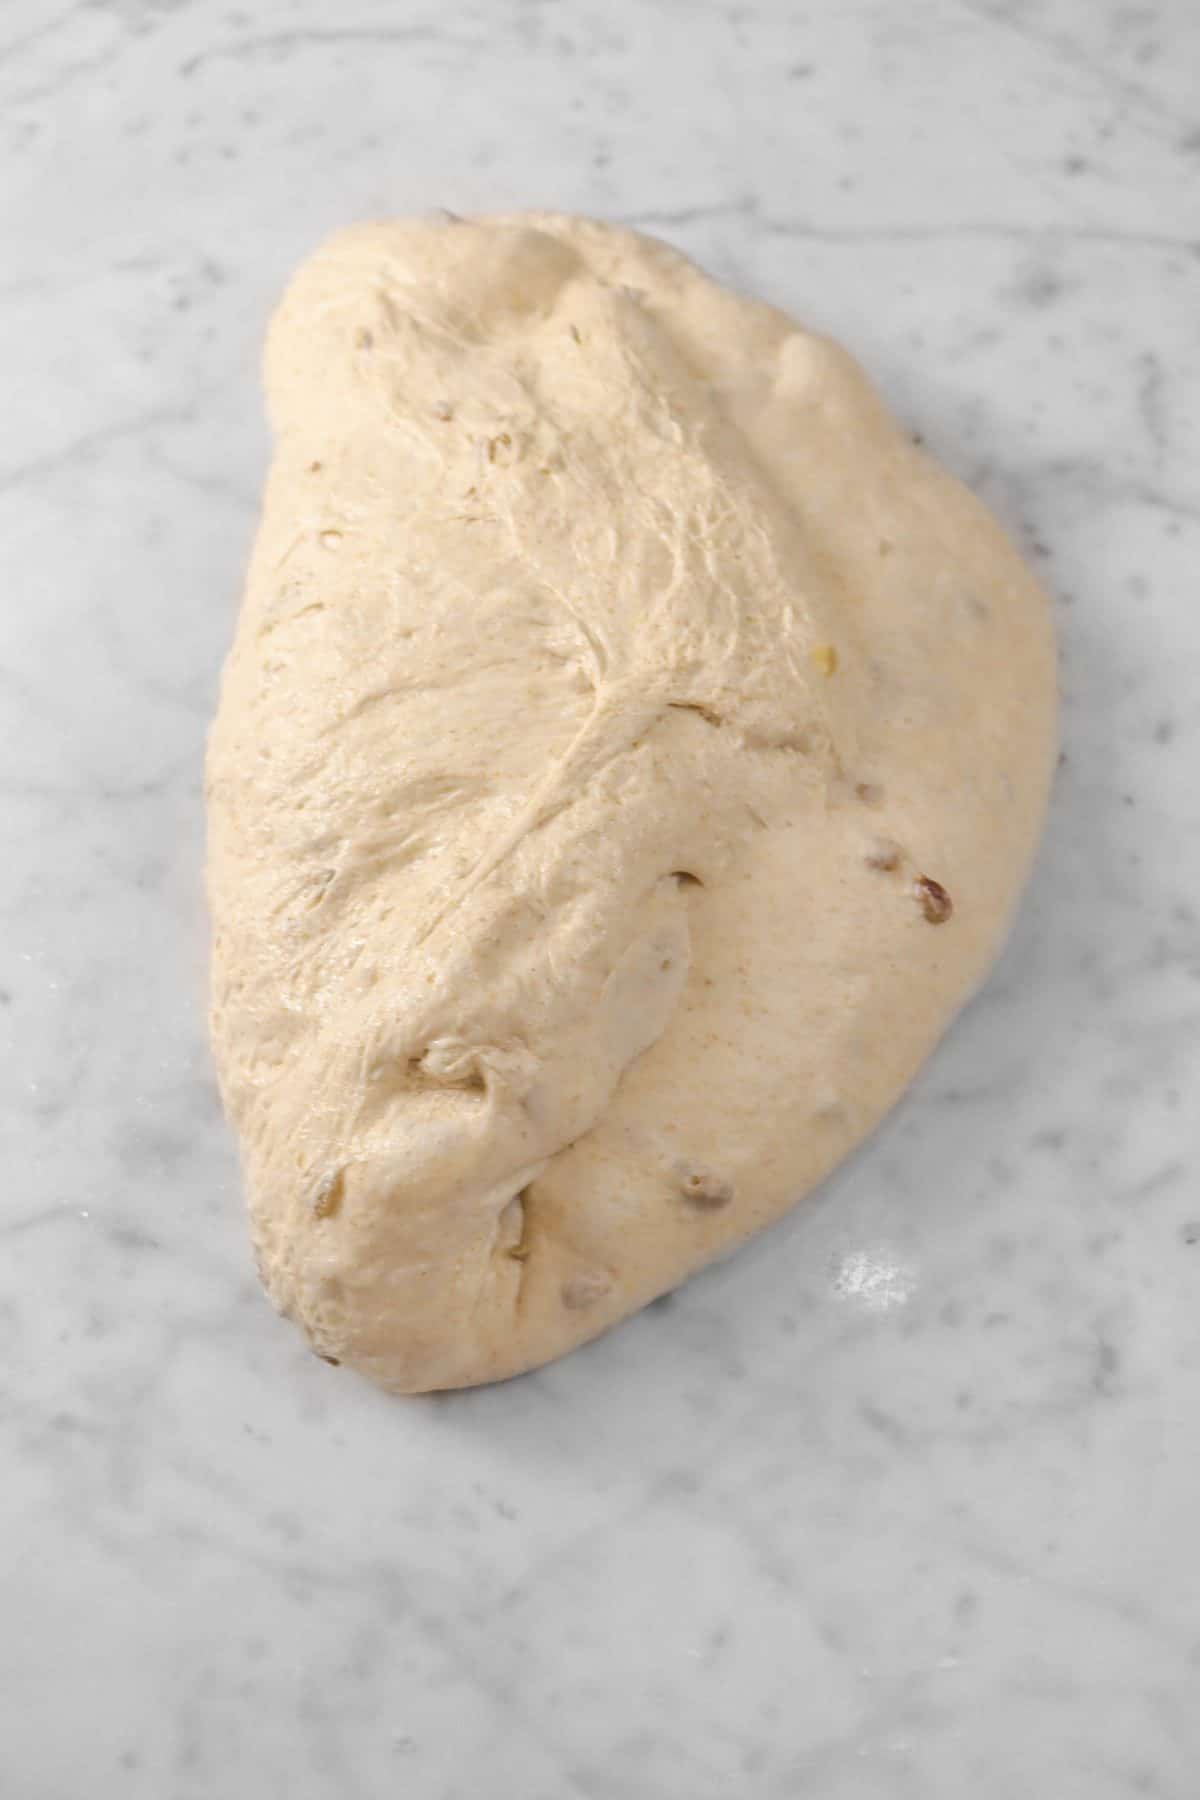 dough folded over in half